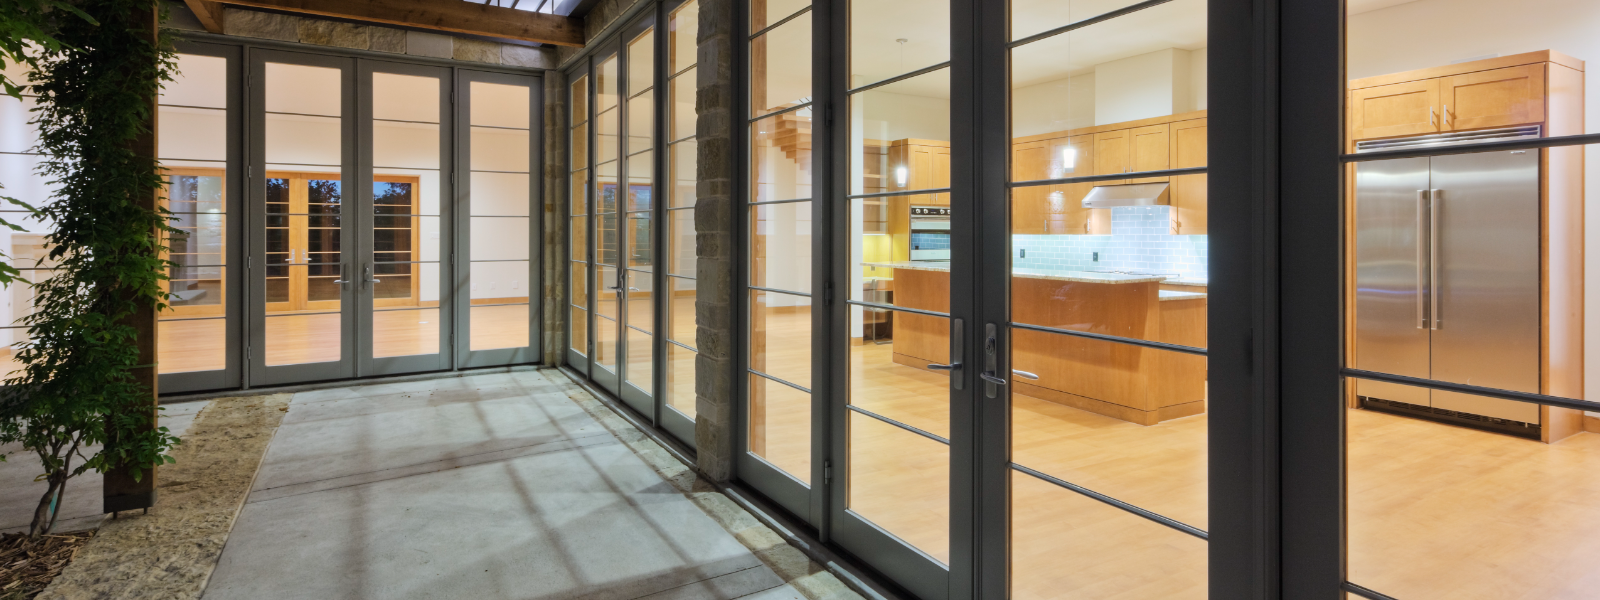 NORDPROFIIL OÜ - fireproof windows, thermal insulation glass facades, custom aluminum constructions, professional glazing...